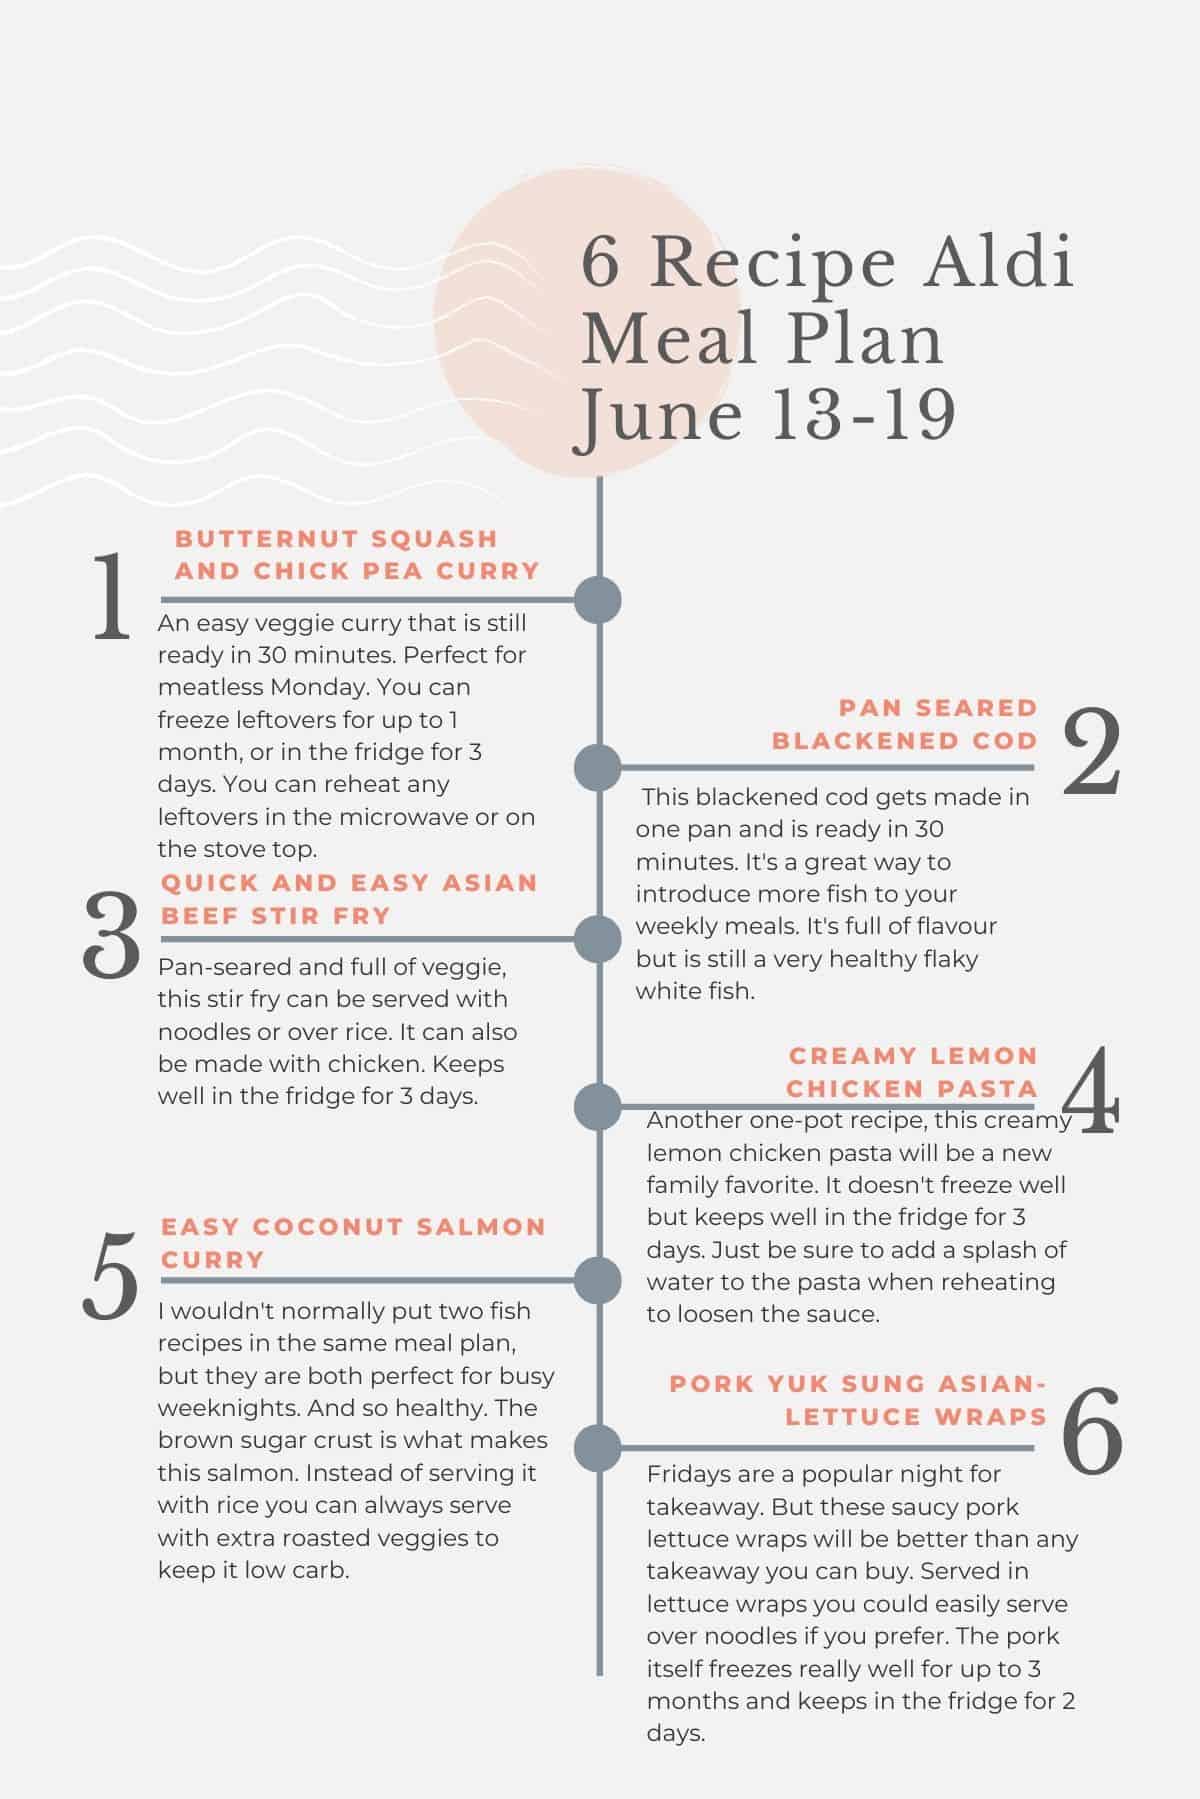 Aldi meal plan menu and tip sheet.